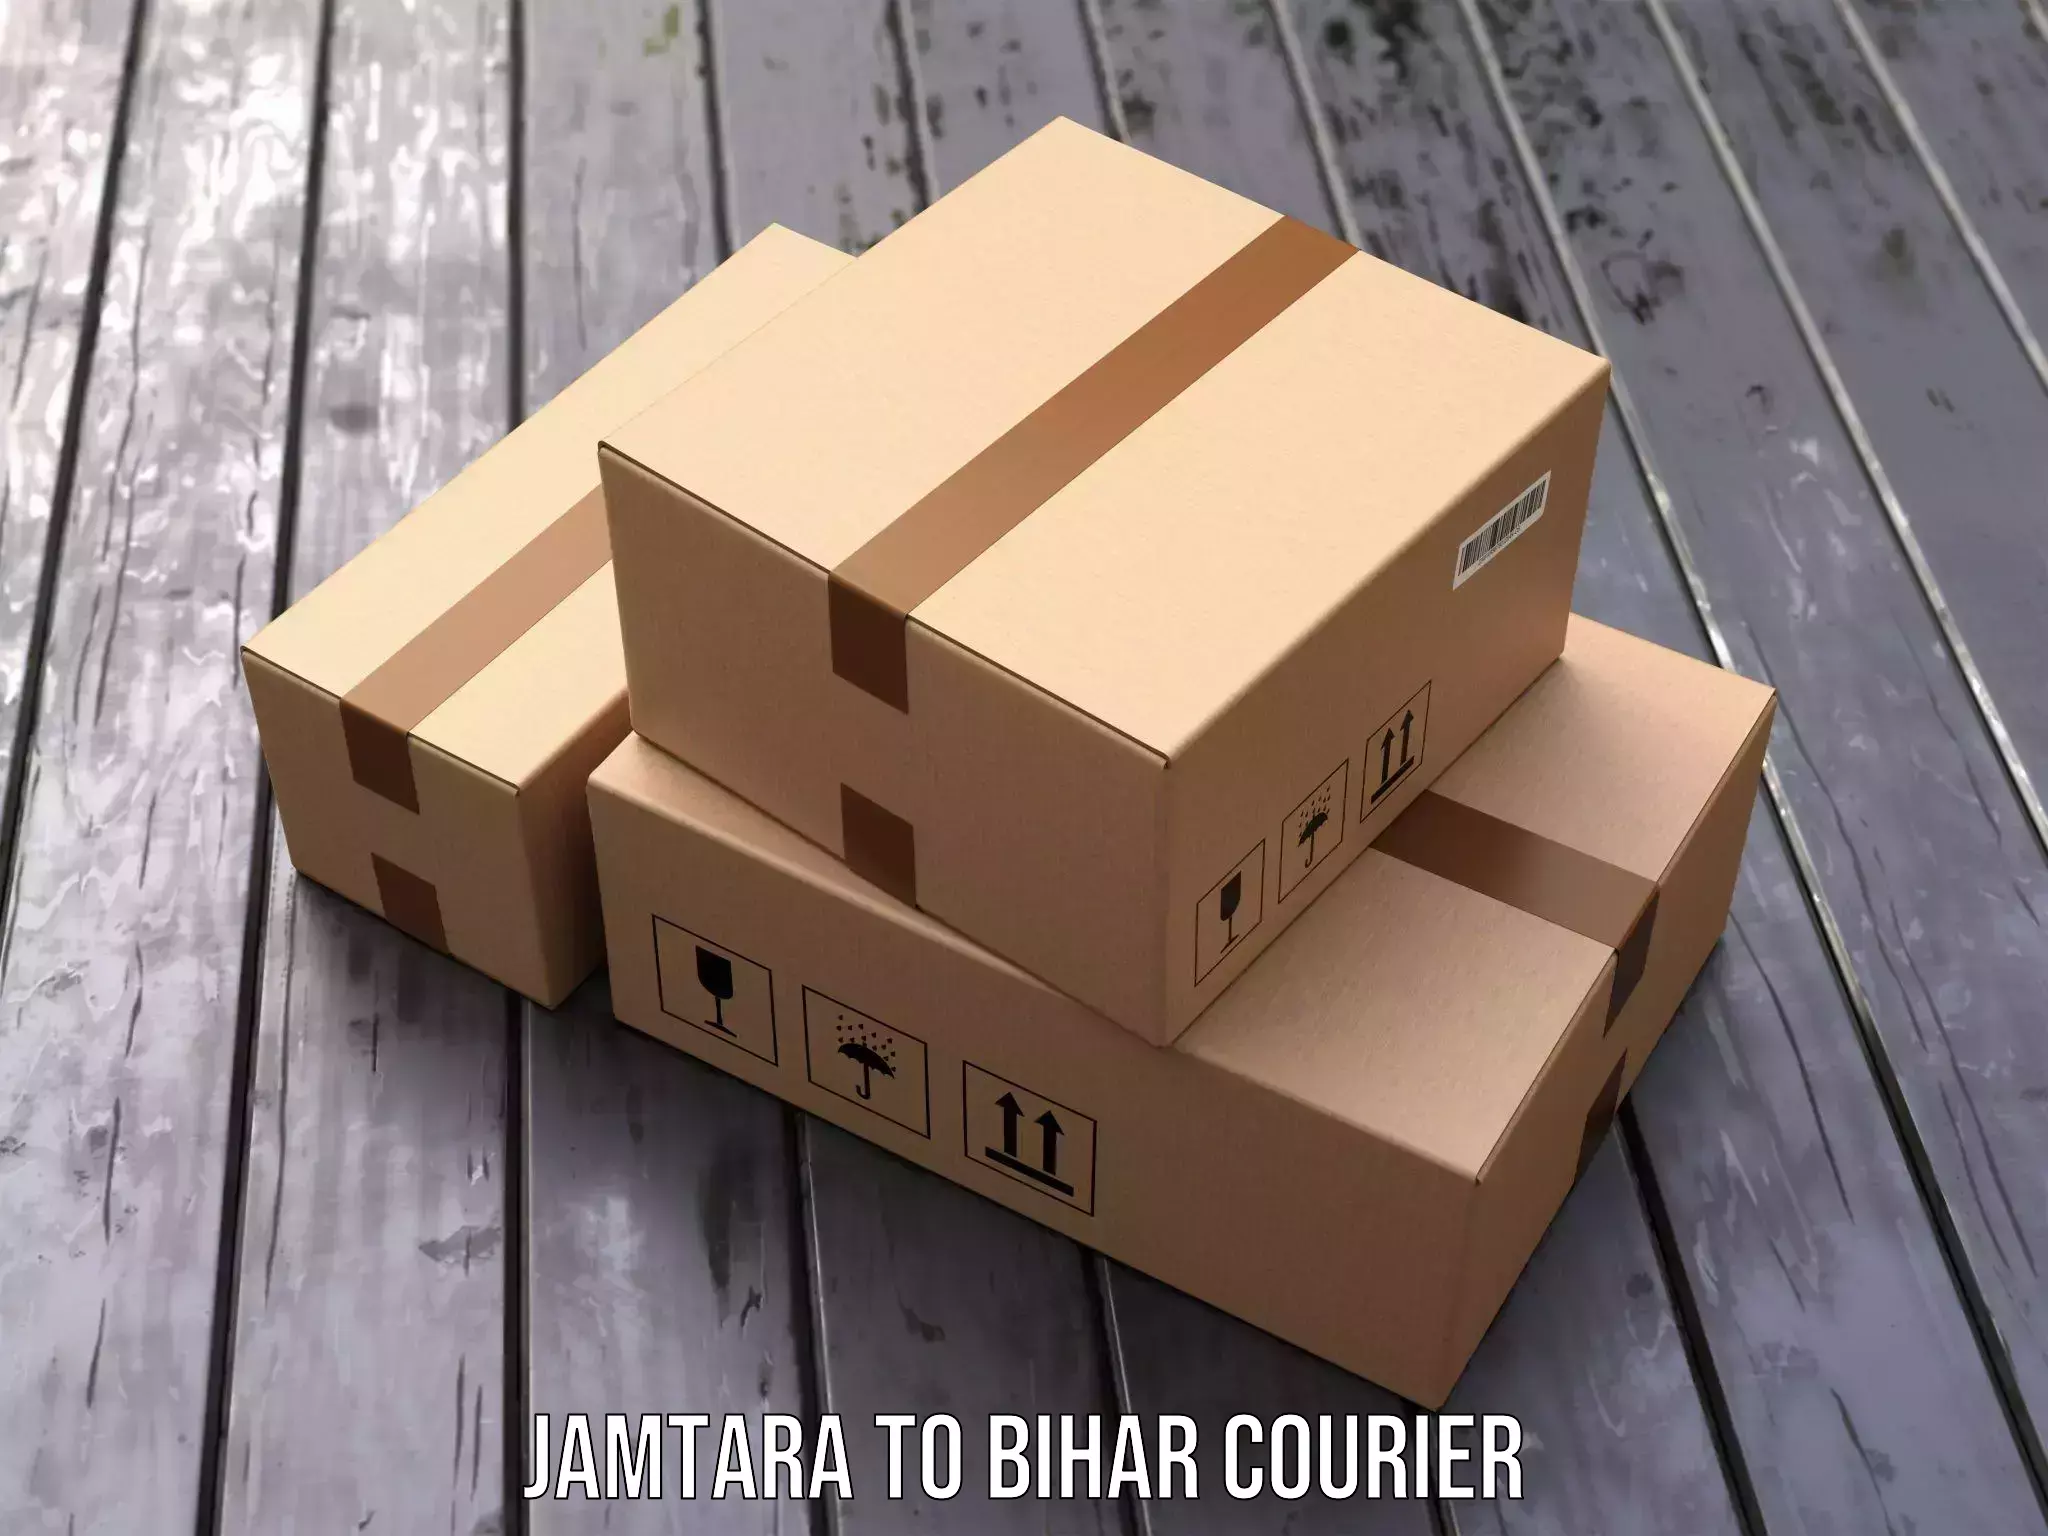 Express delivery network Jamtara to Madhepura